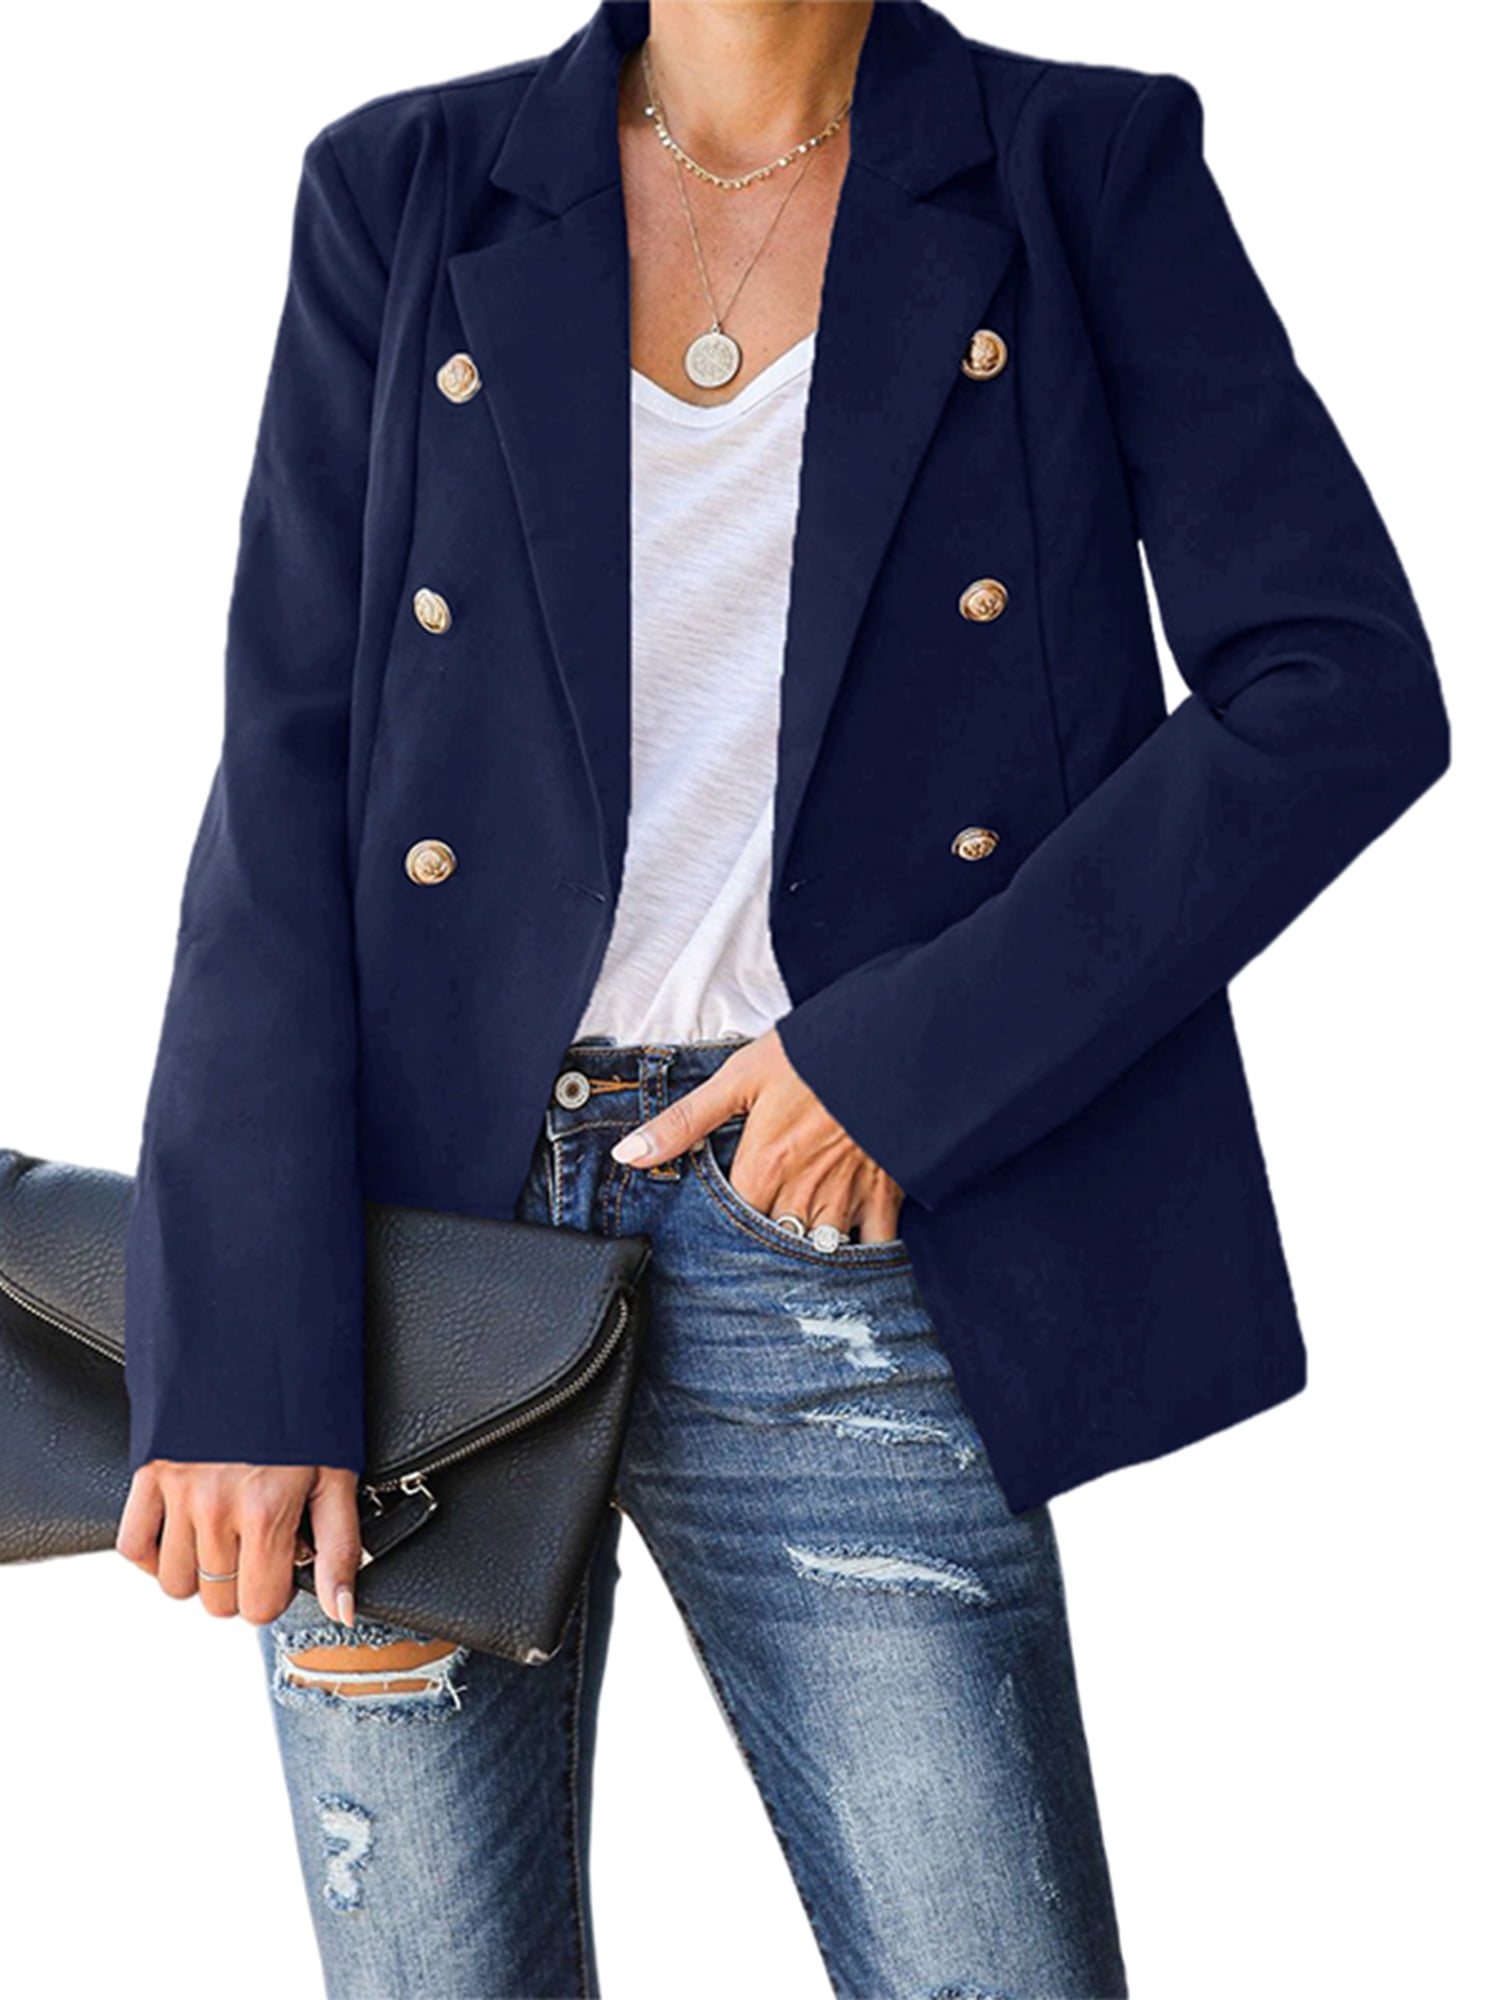 Avamo Women Blazer Vest Solid Color Cardigan Jacket Open Front